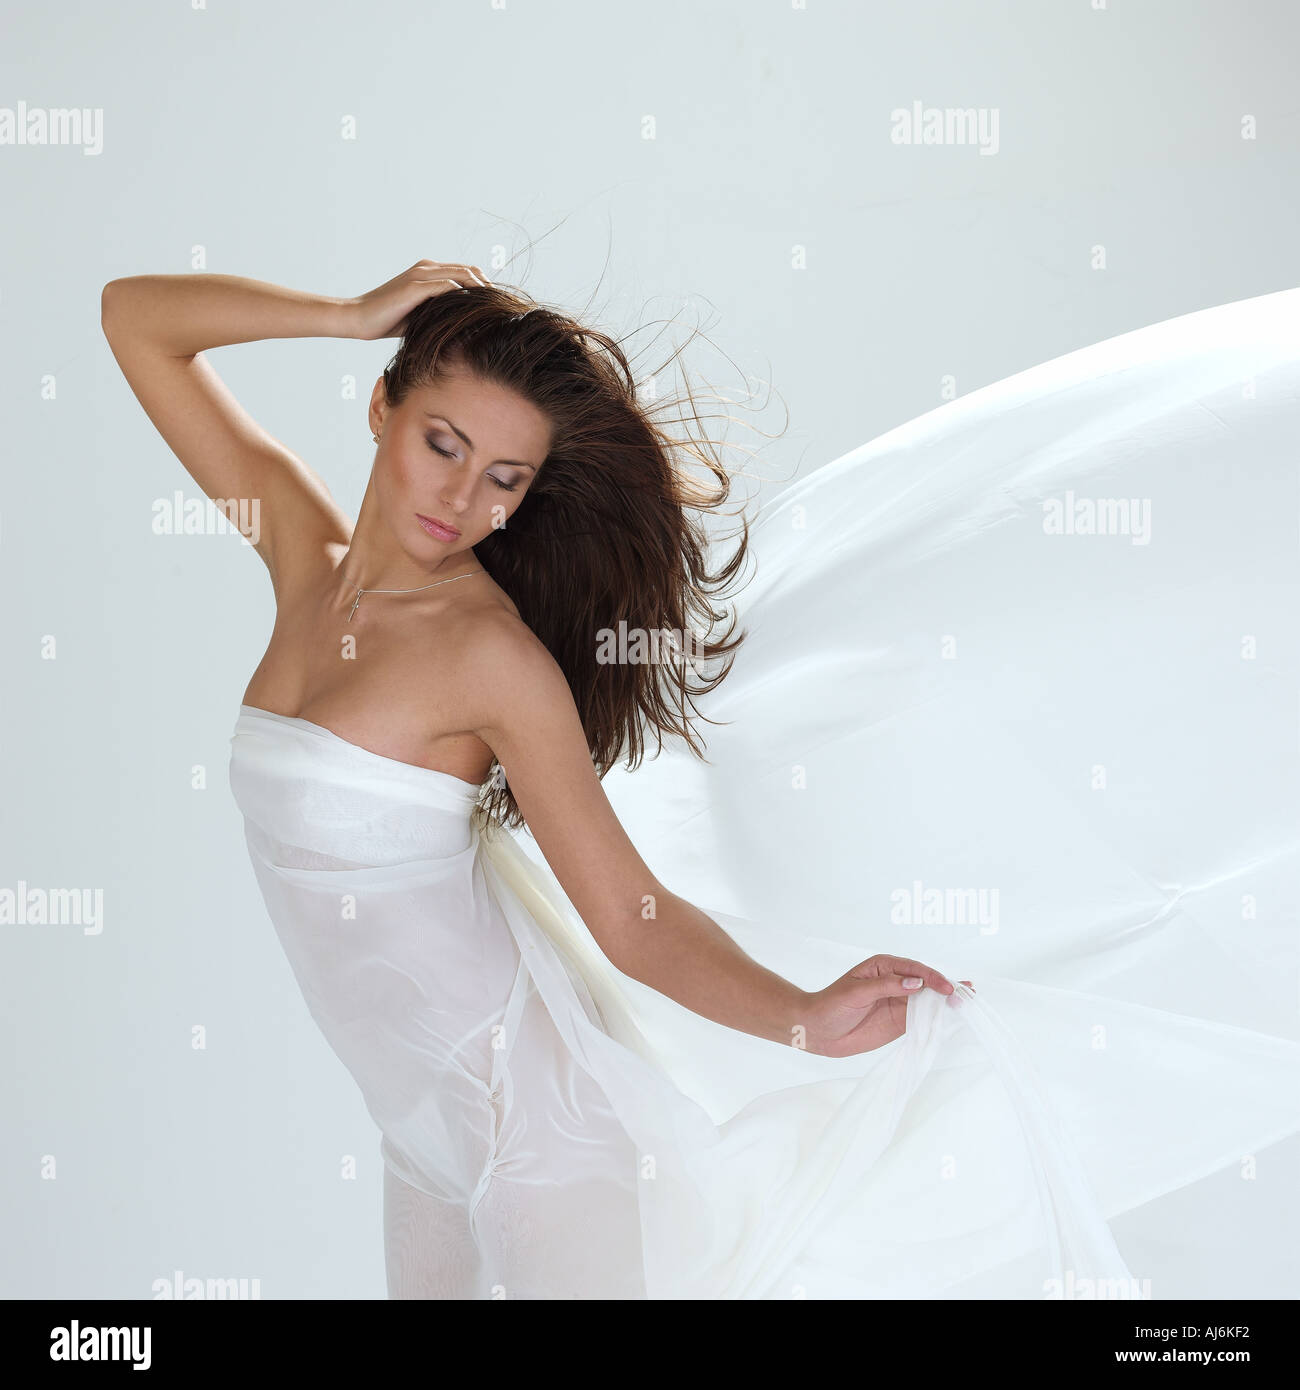 Girl Transparent Dress On White Background Stock Photo 24973858 |  Shutterstock